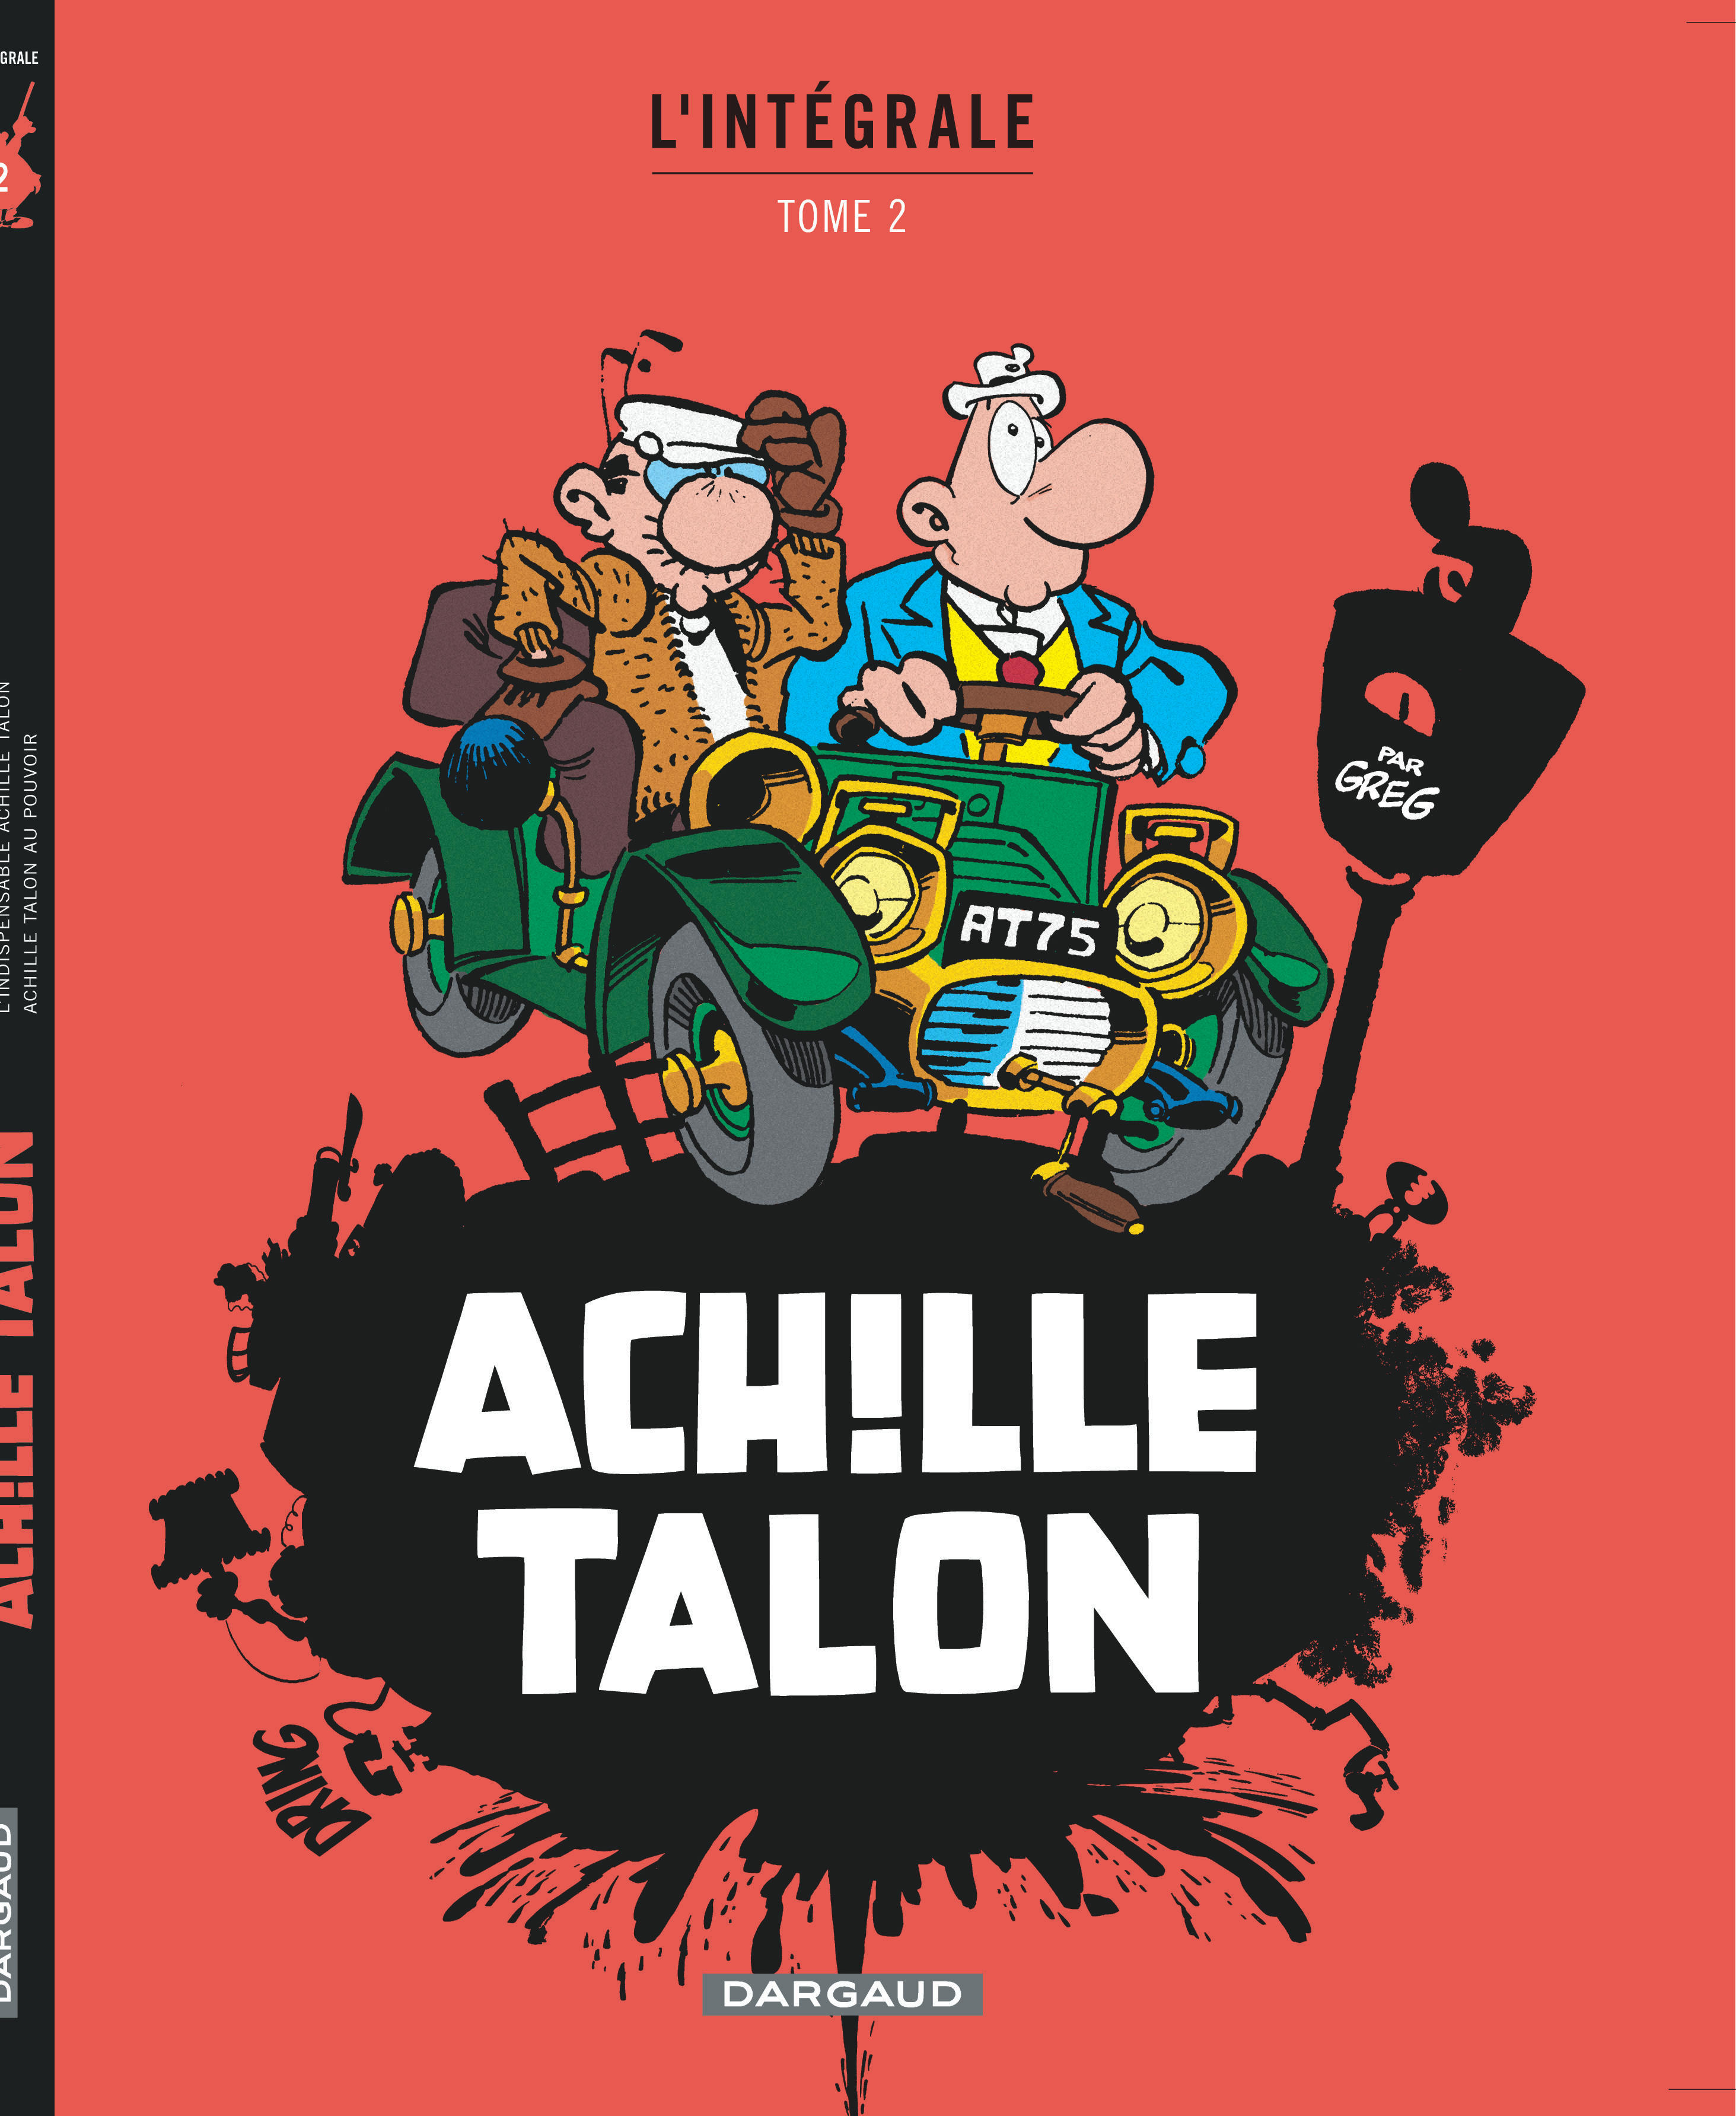 Achille Talon - Intégrales – Tome 2 – Mon Oeuvre à moi - tome 2 - couv